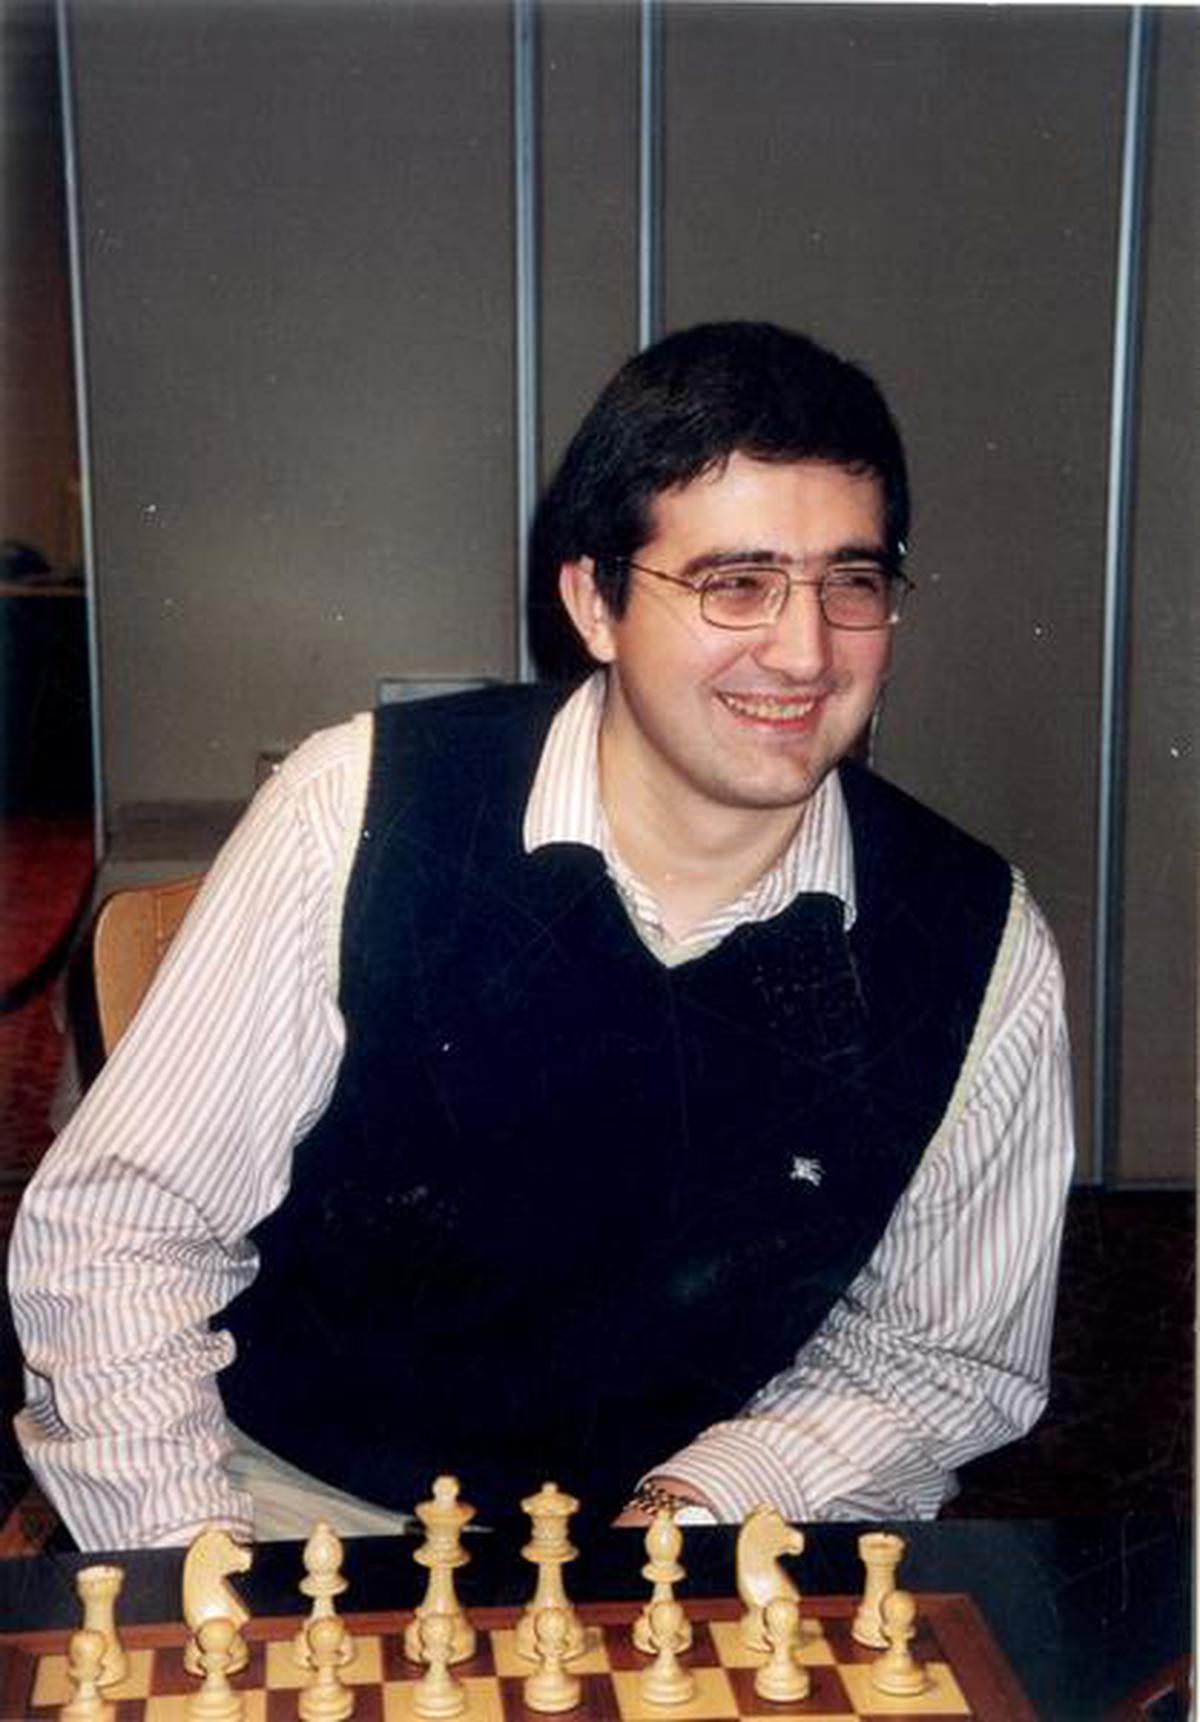 Vladimir Kramnik believes that chess - FIDE Online Arena